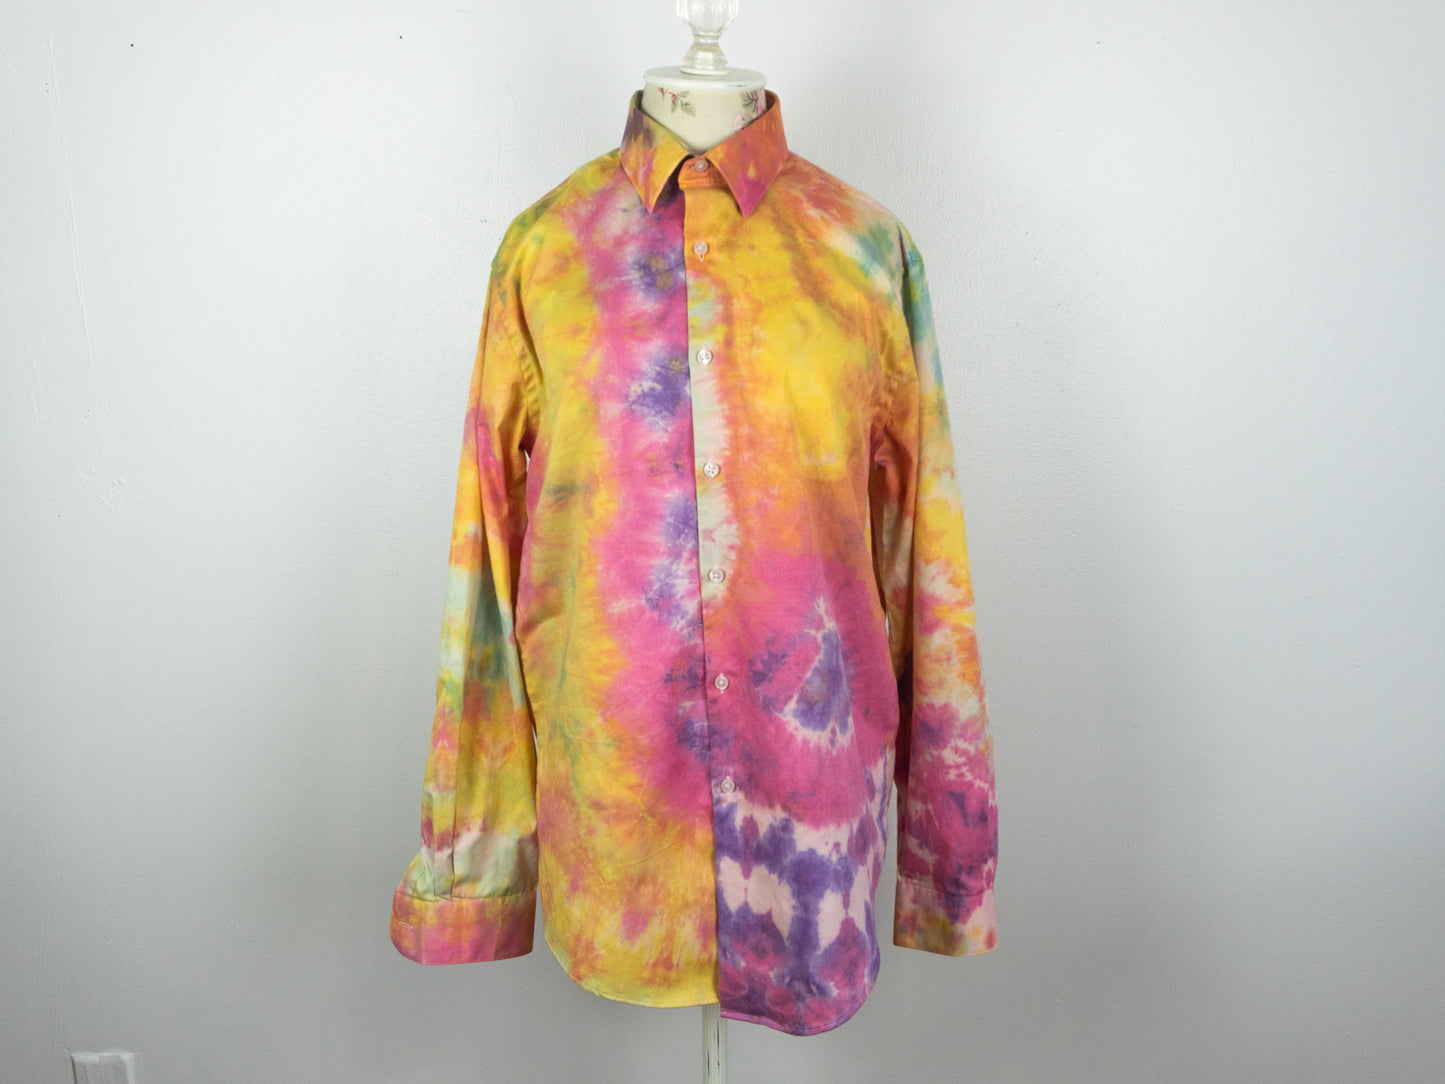 Custom Tie Dye Dress Shirt, Long or Short Sleeve